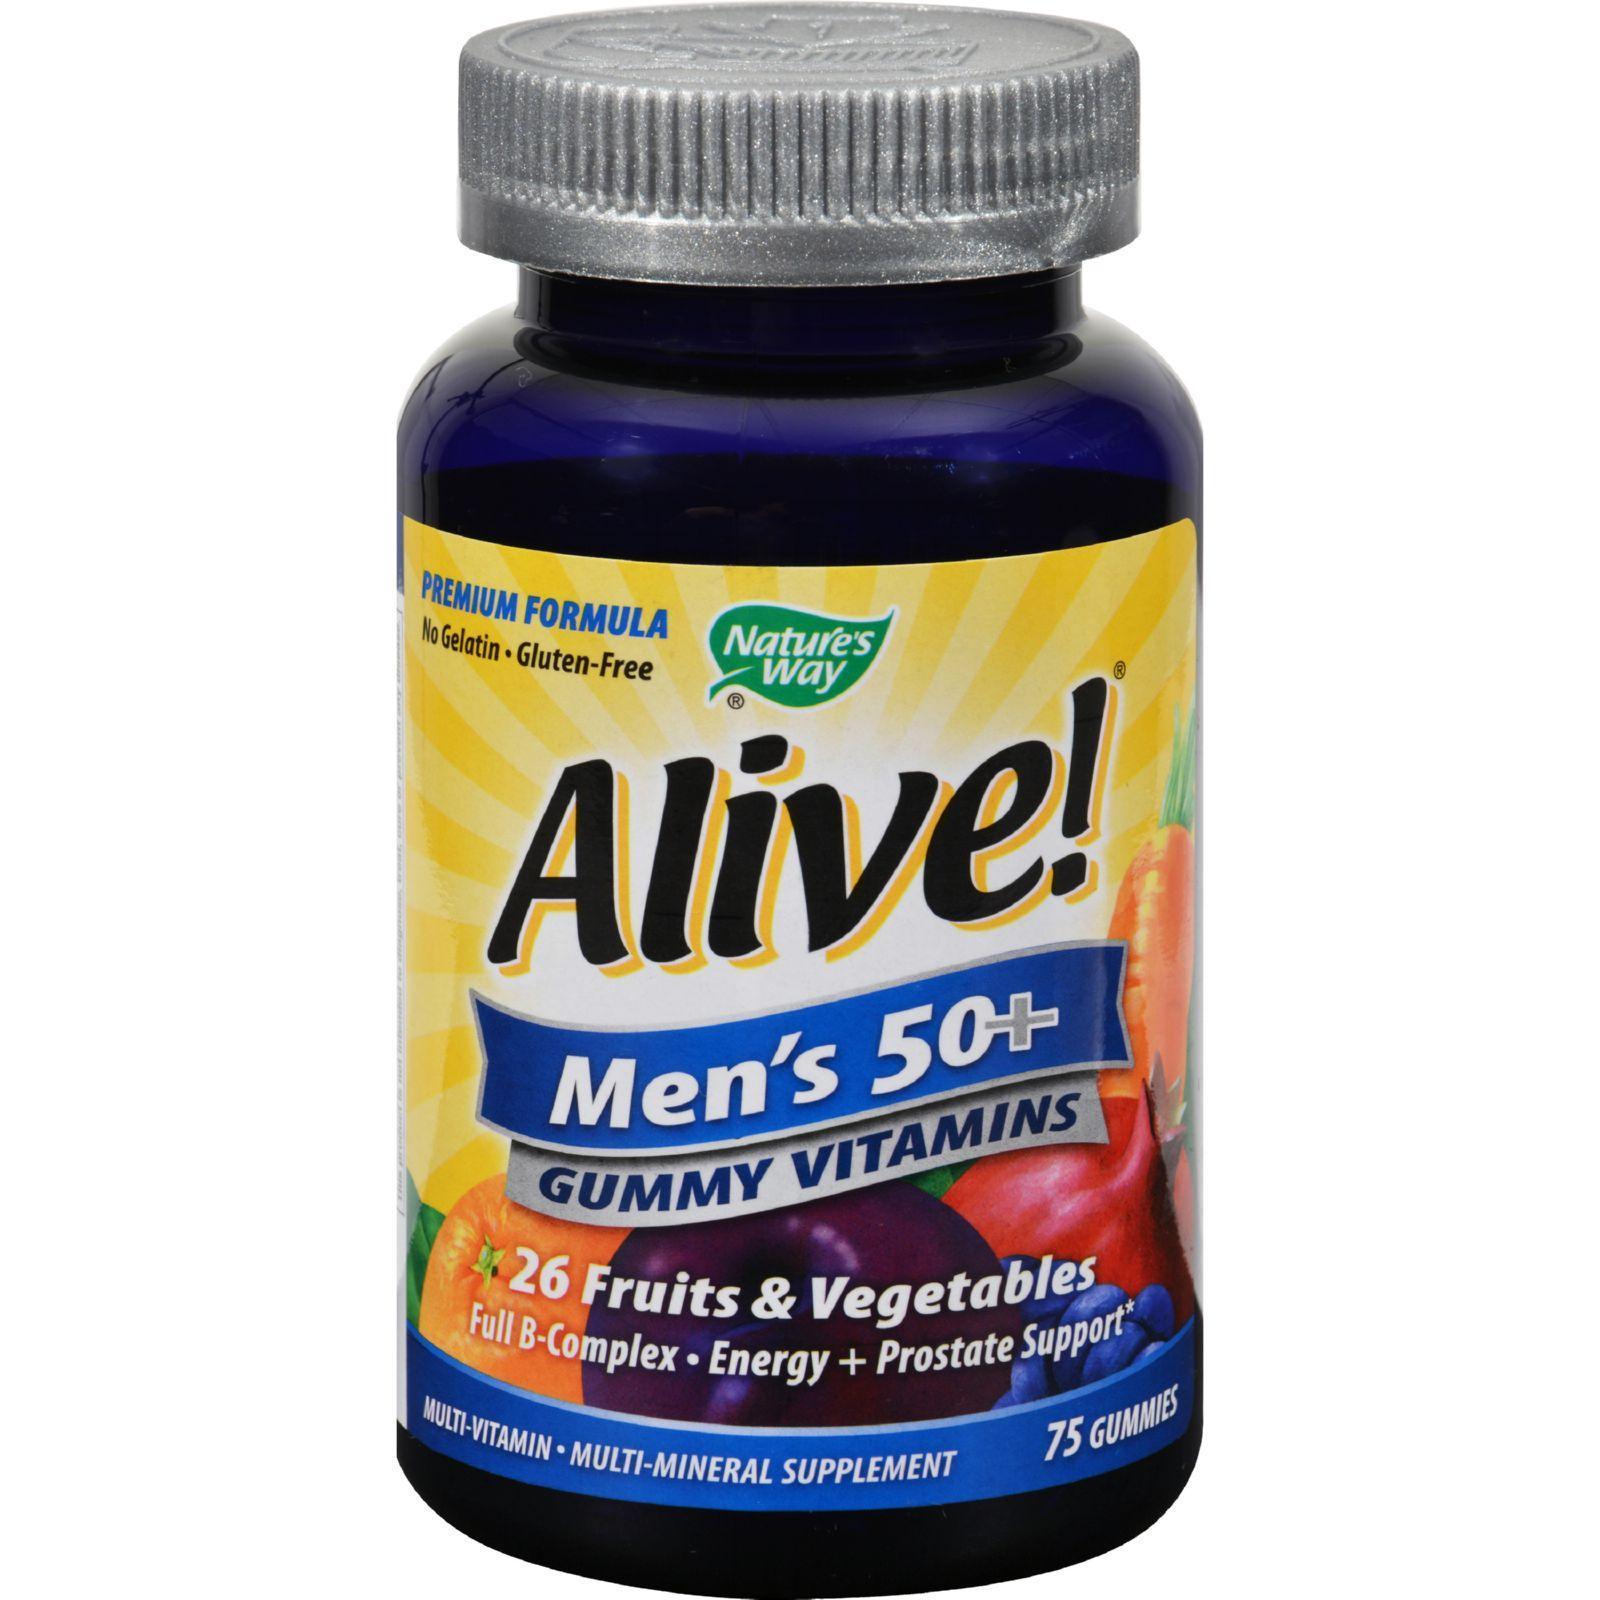 Nature's Way Alive - Men's 50+ Gummy Multi-vitamins - 75 Chewables